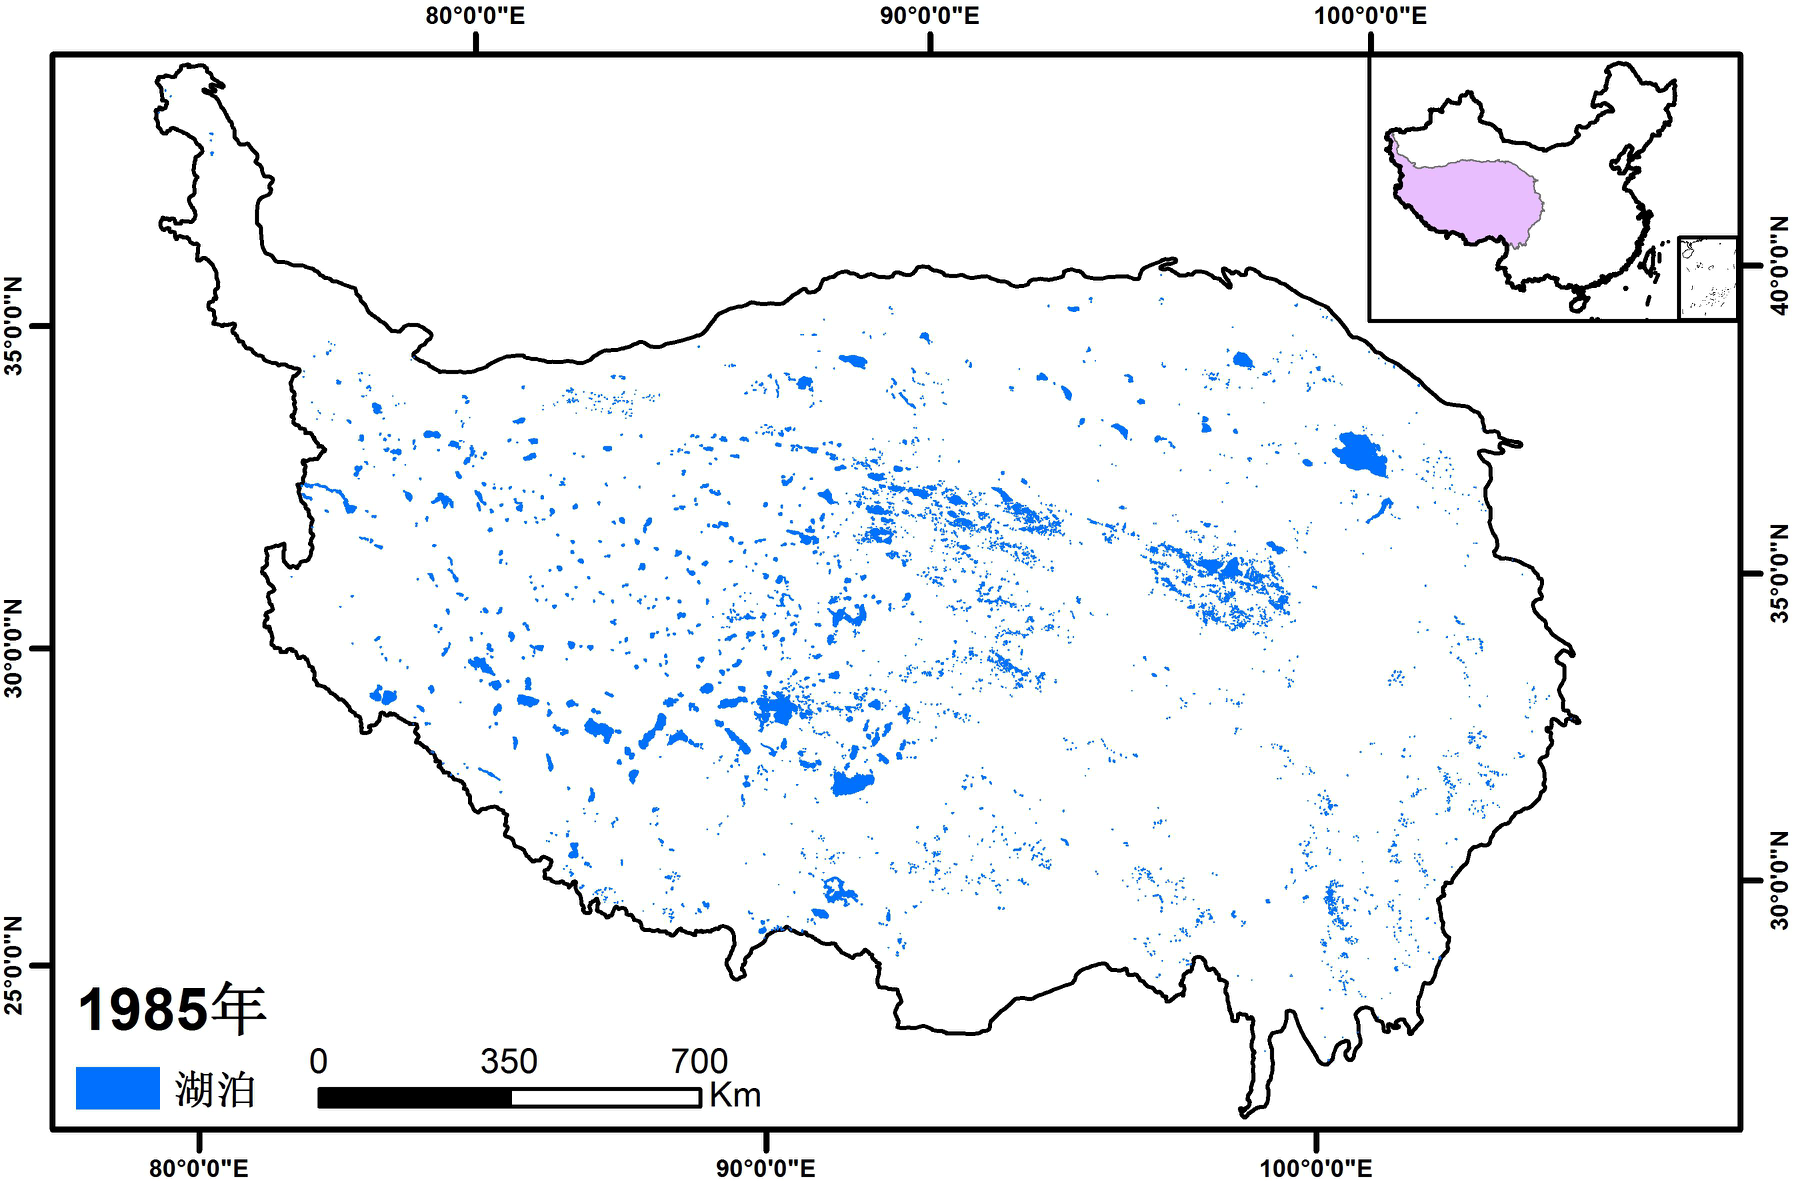 Lake surface area dynamics on the Tibetan Plateau (Version 1.0) (1984-2016)